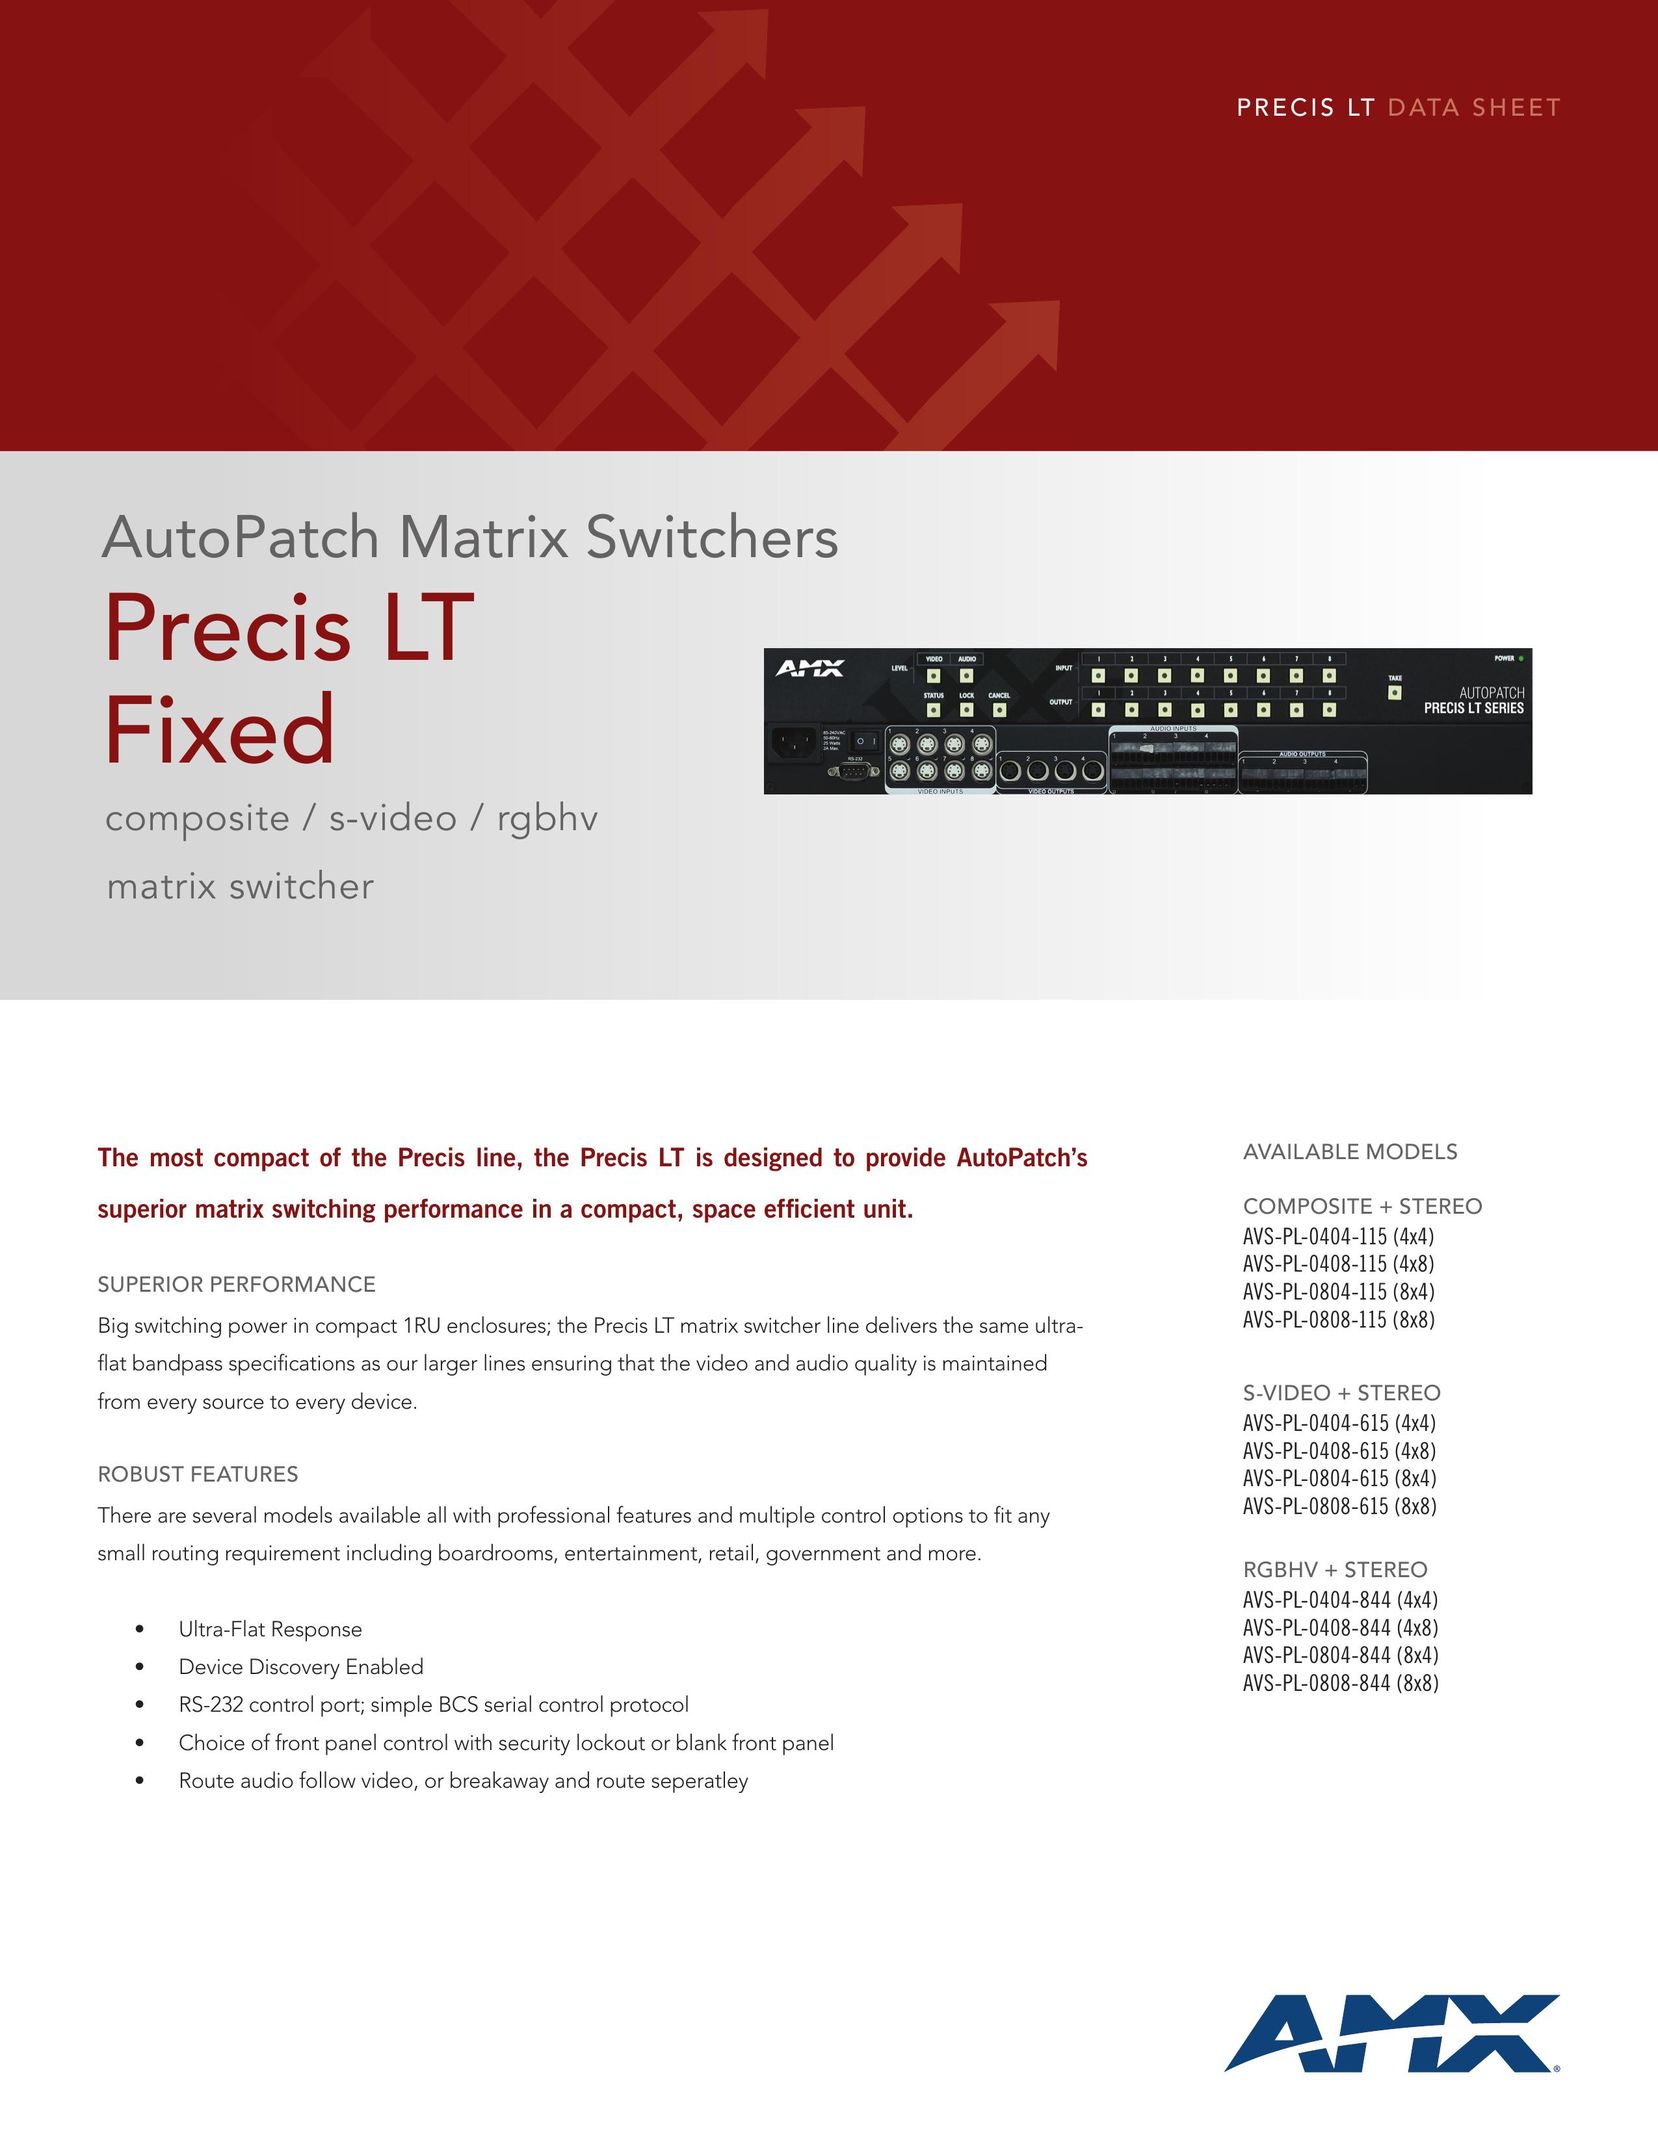 AMX AVS-PL-0808-844 Switch User Manual